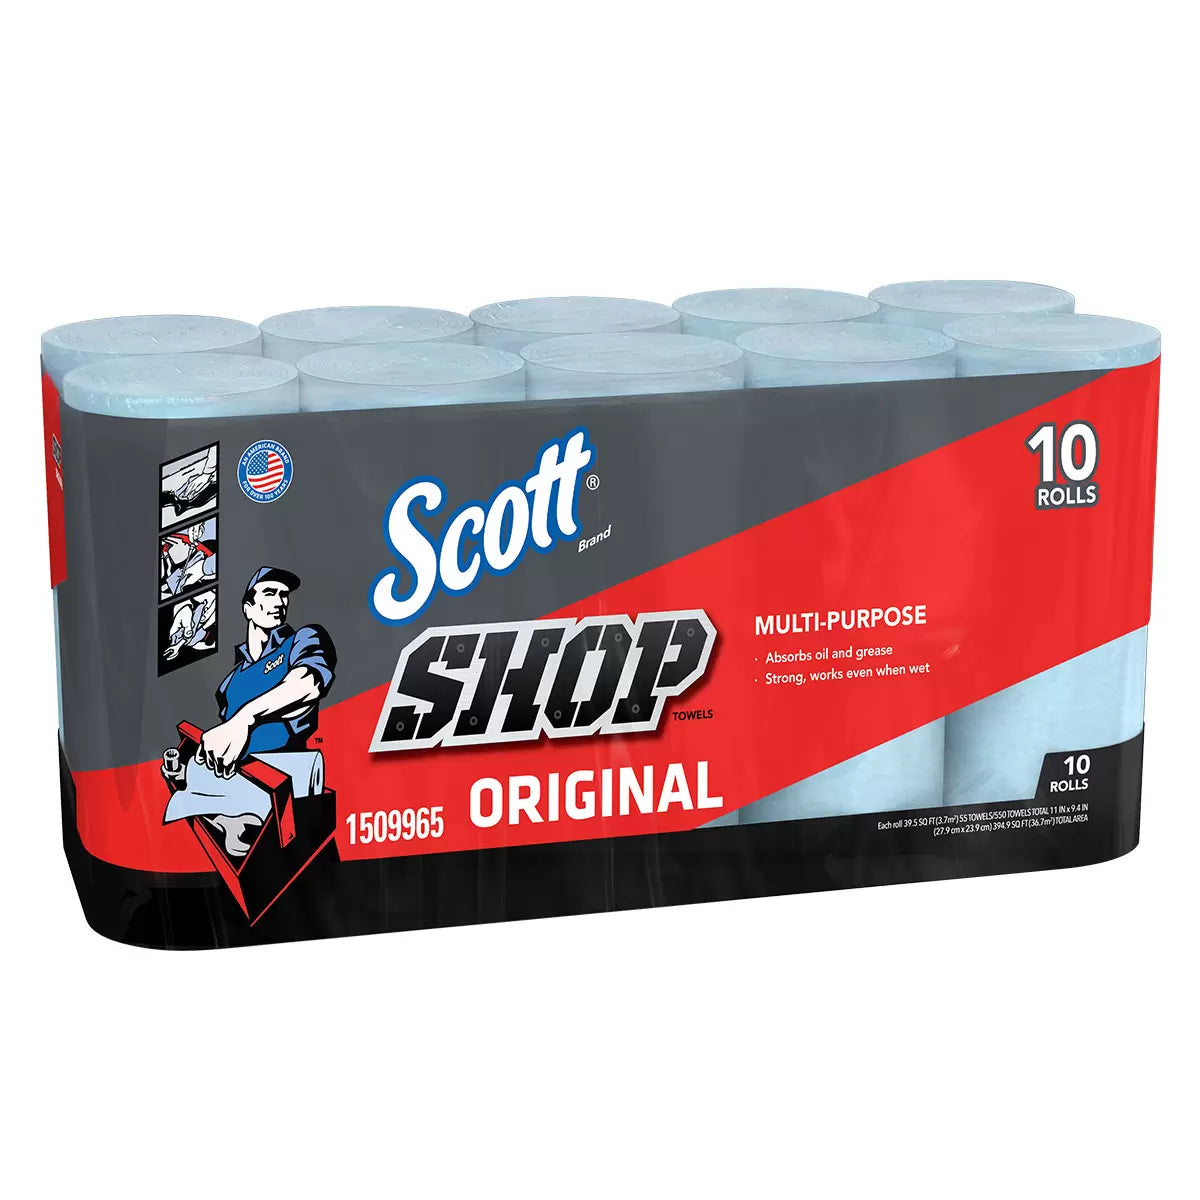 Scott Shop Multipurpose Towels - Pack of 10